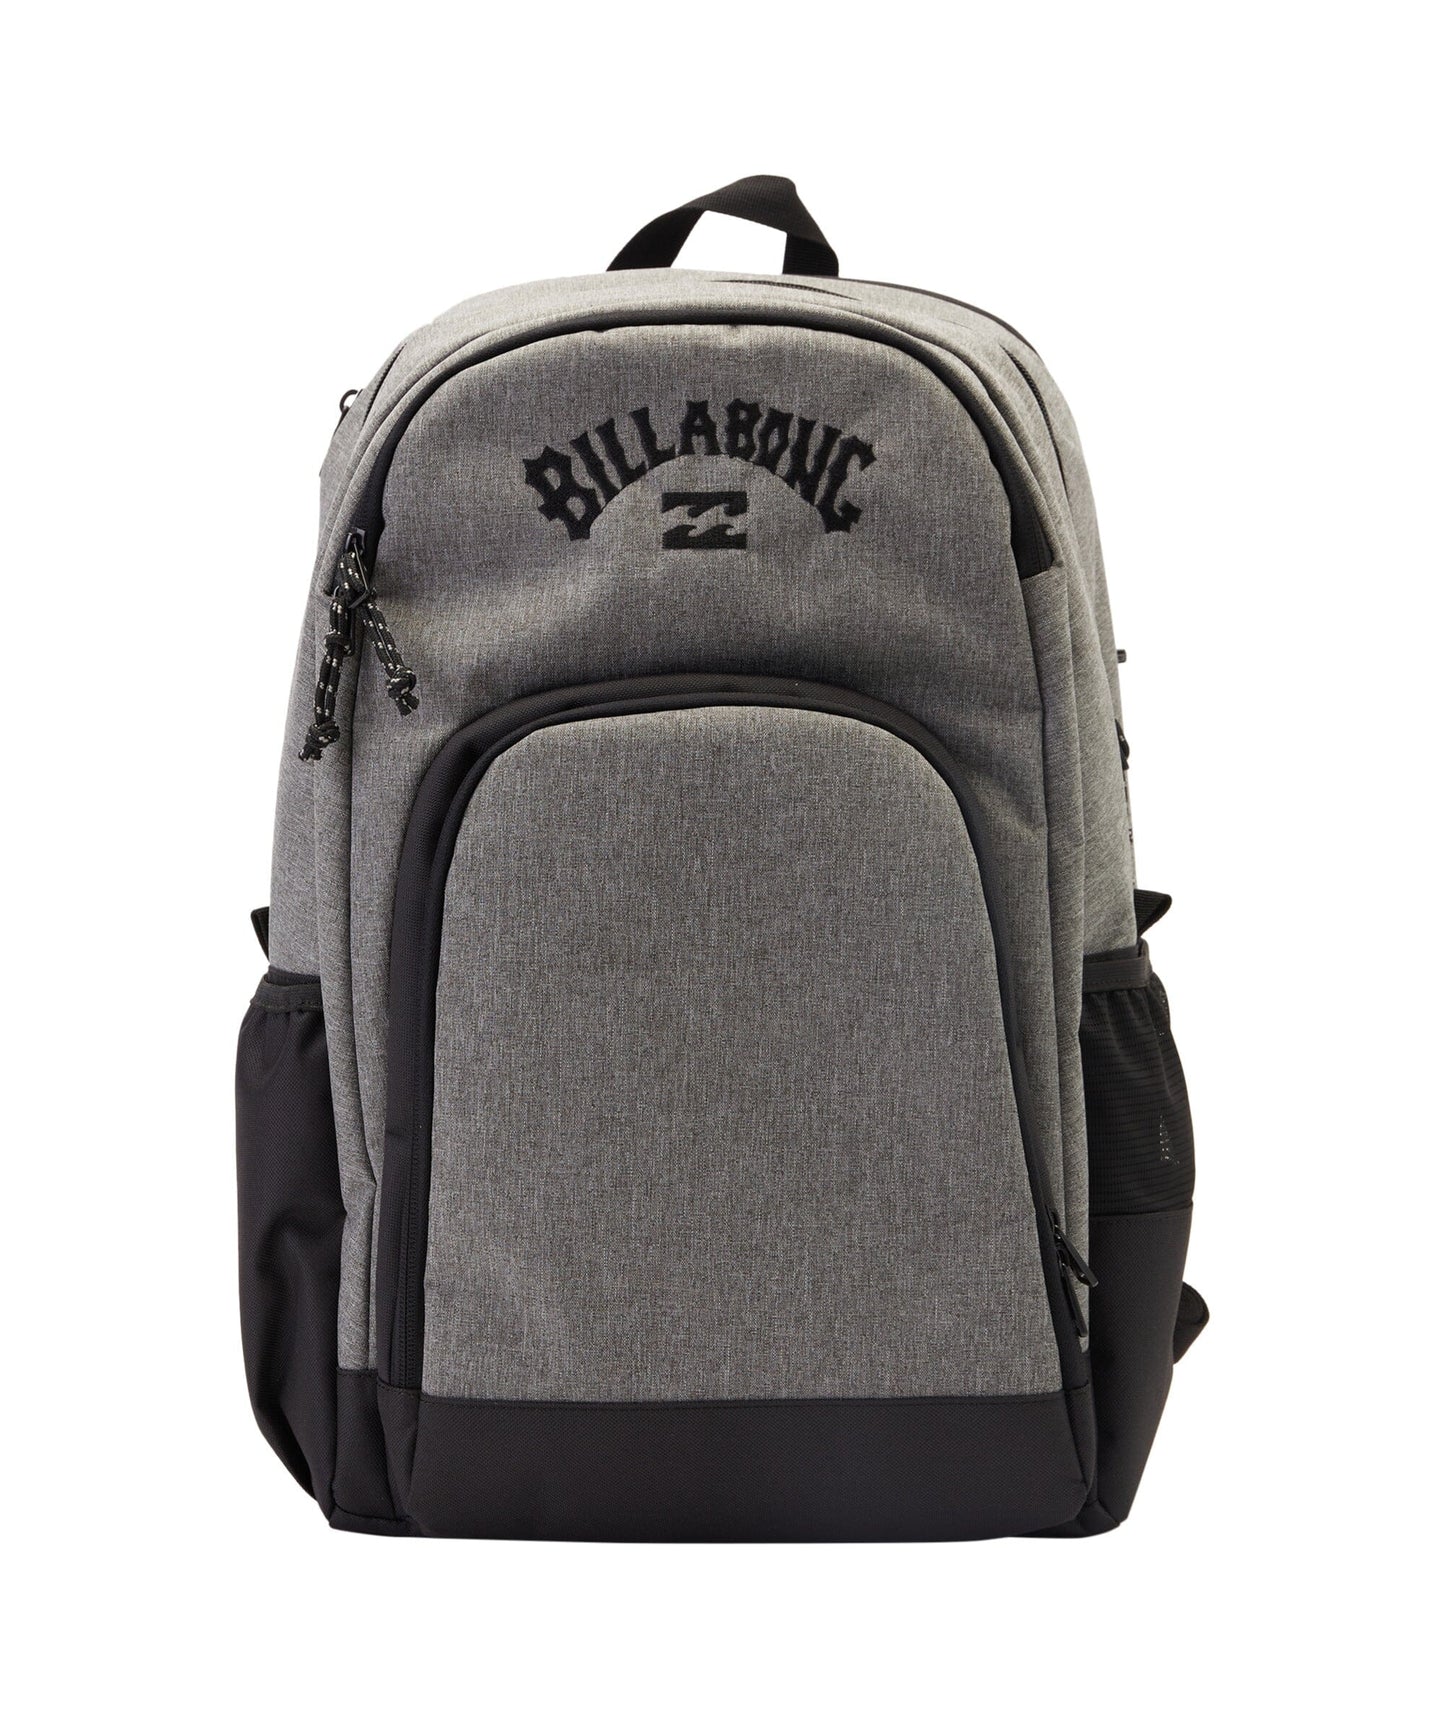 Billabong Command 29L Large Backpack